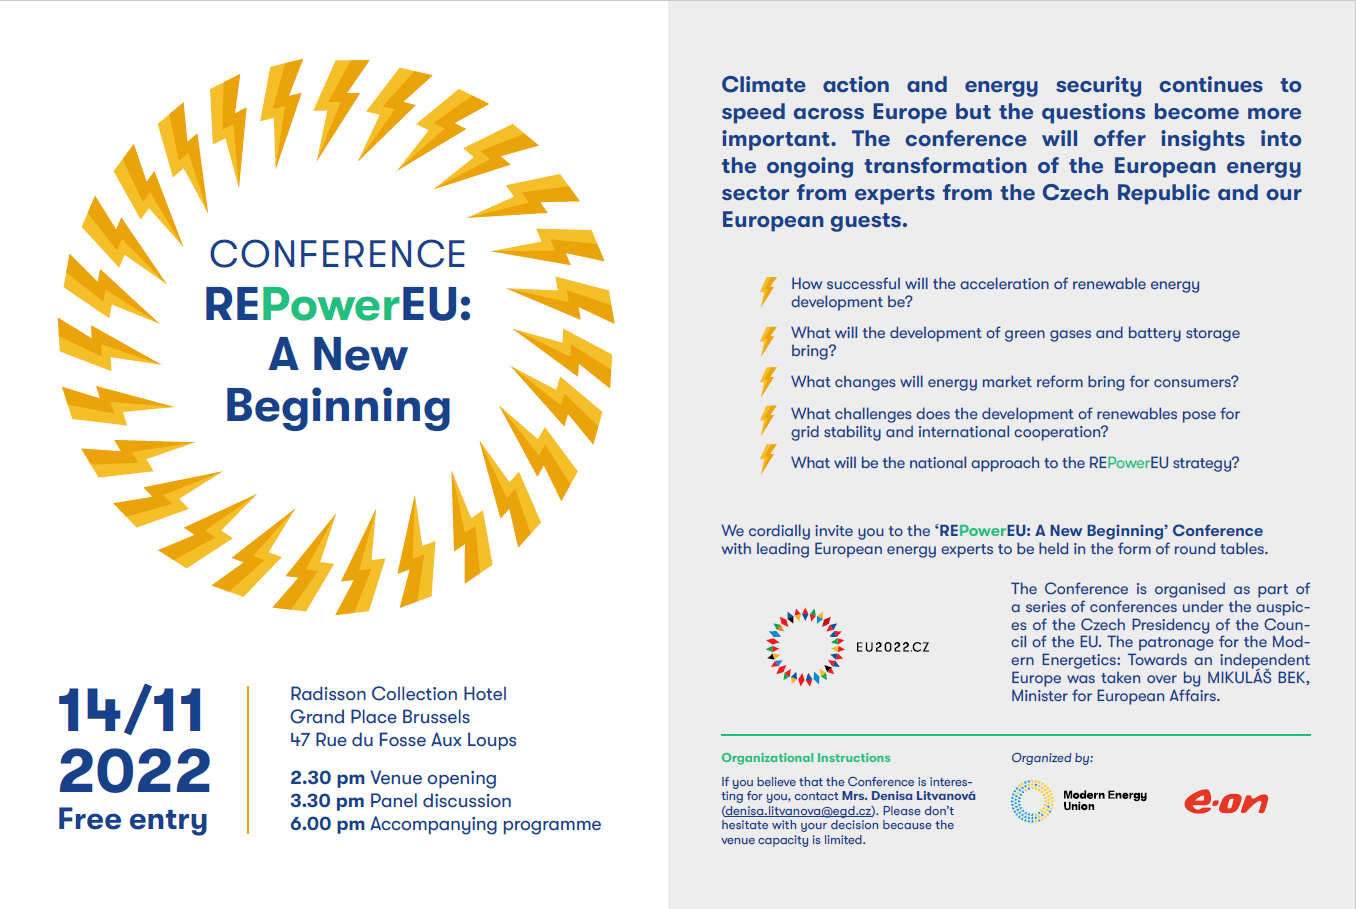 Conference RePower EU: A New Beginning